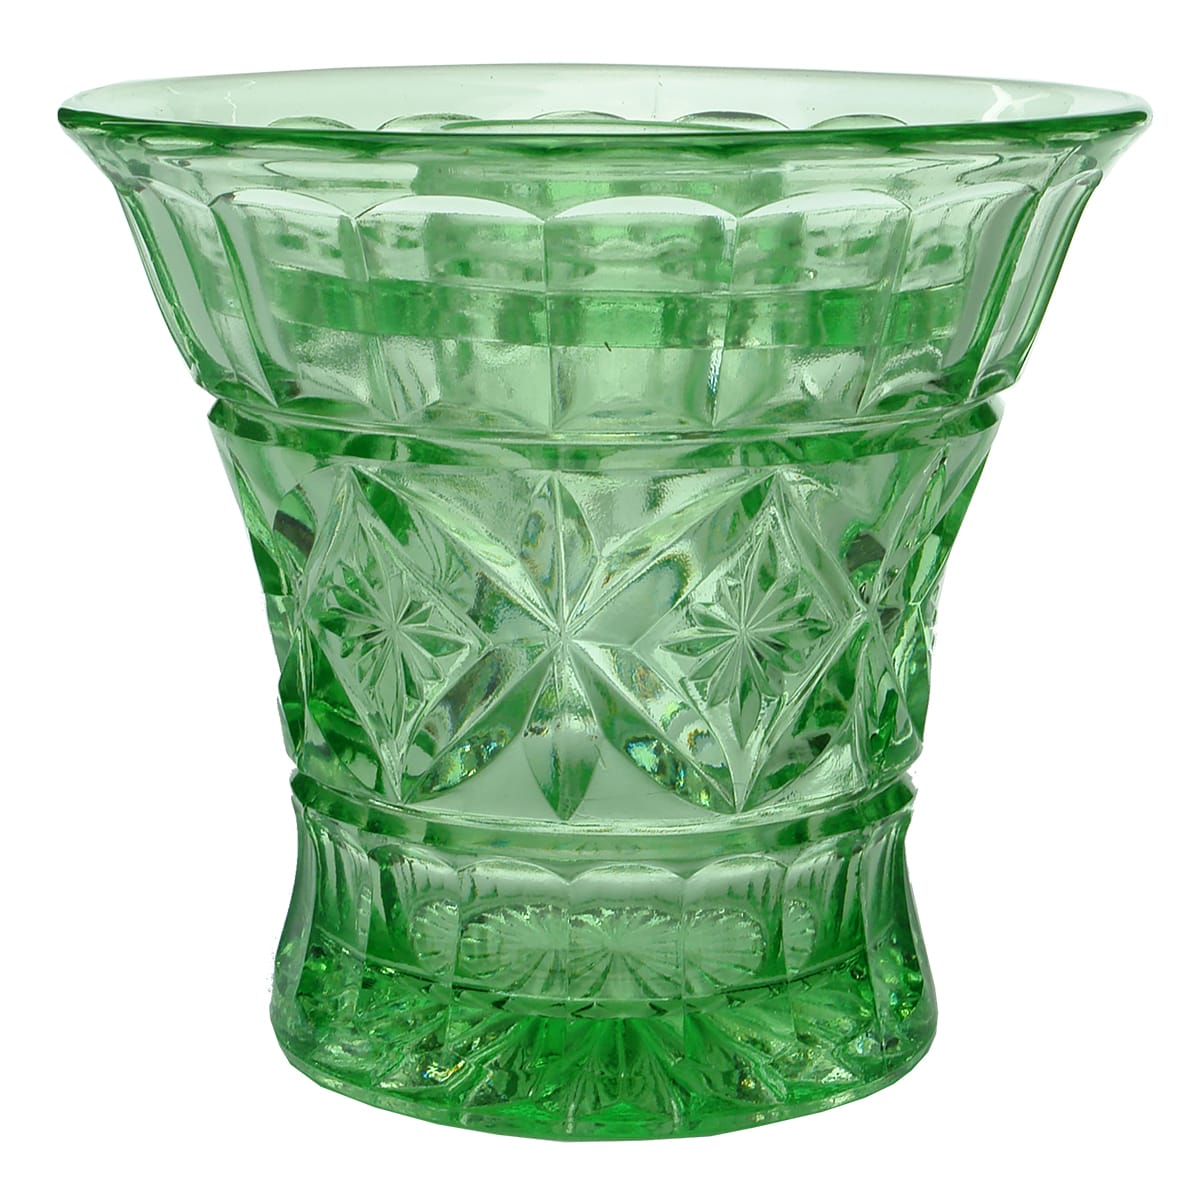 Glassware. Ornate green depression glass vase with frog.